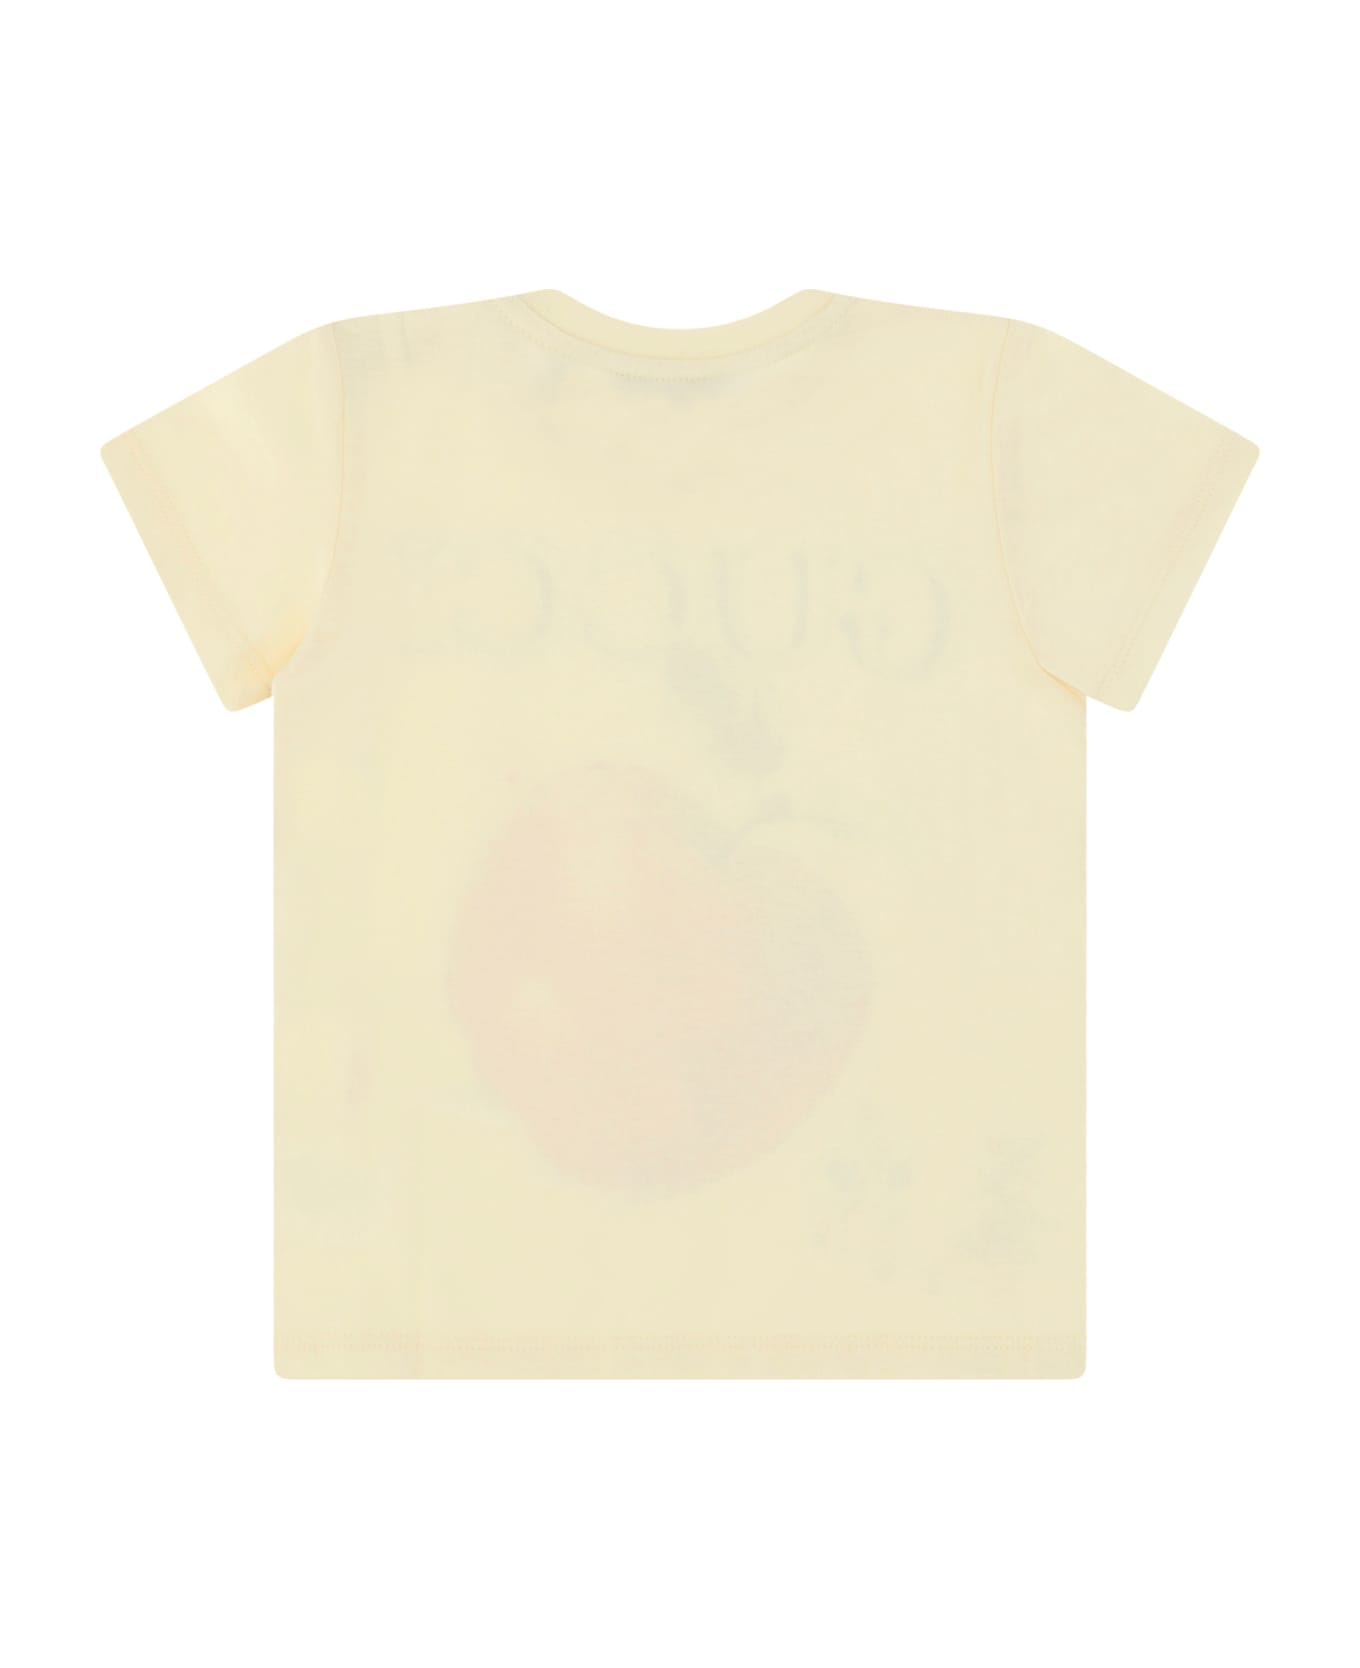 Gucci T-shirt For Boy